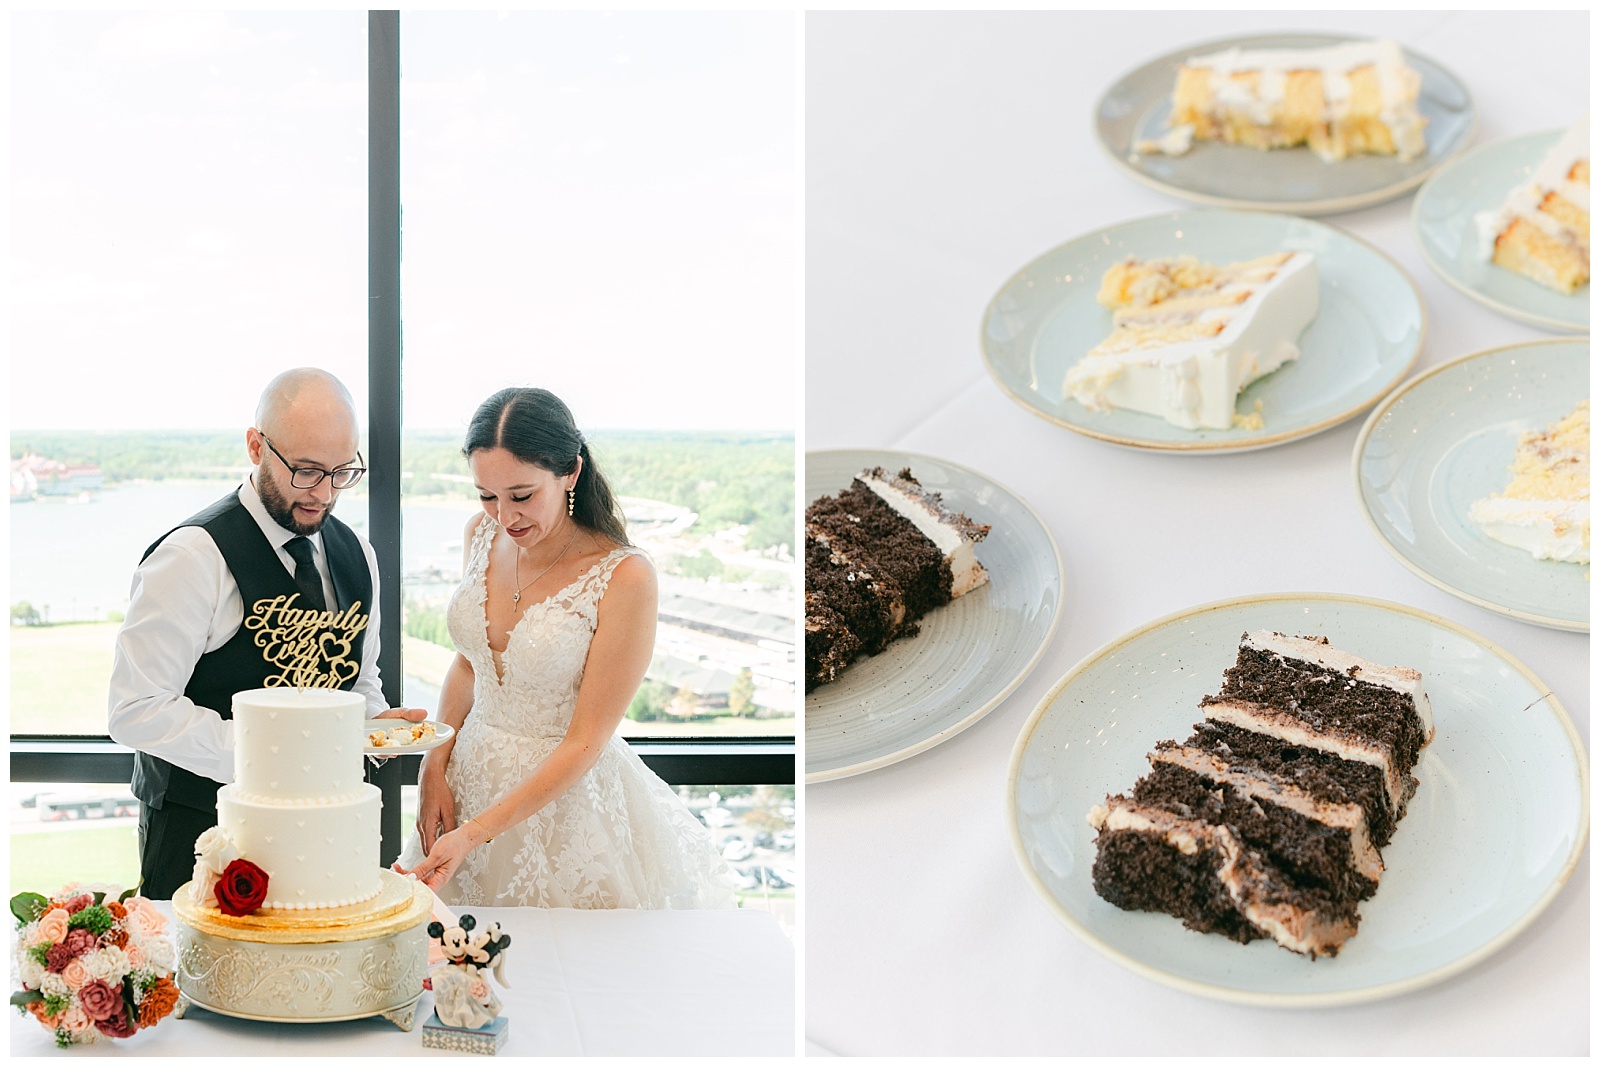 Cake cutting at wedding reception photographs at the California Gill by Elizabeth Kane in Orlando Florida